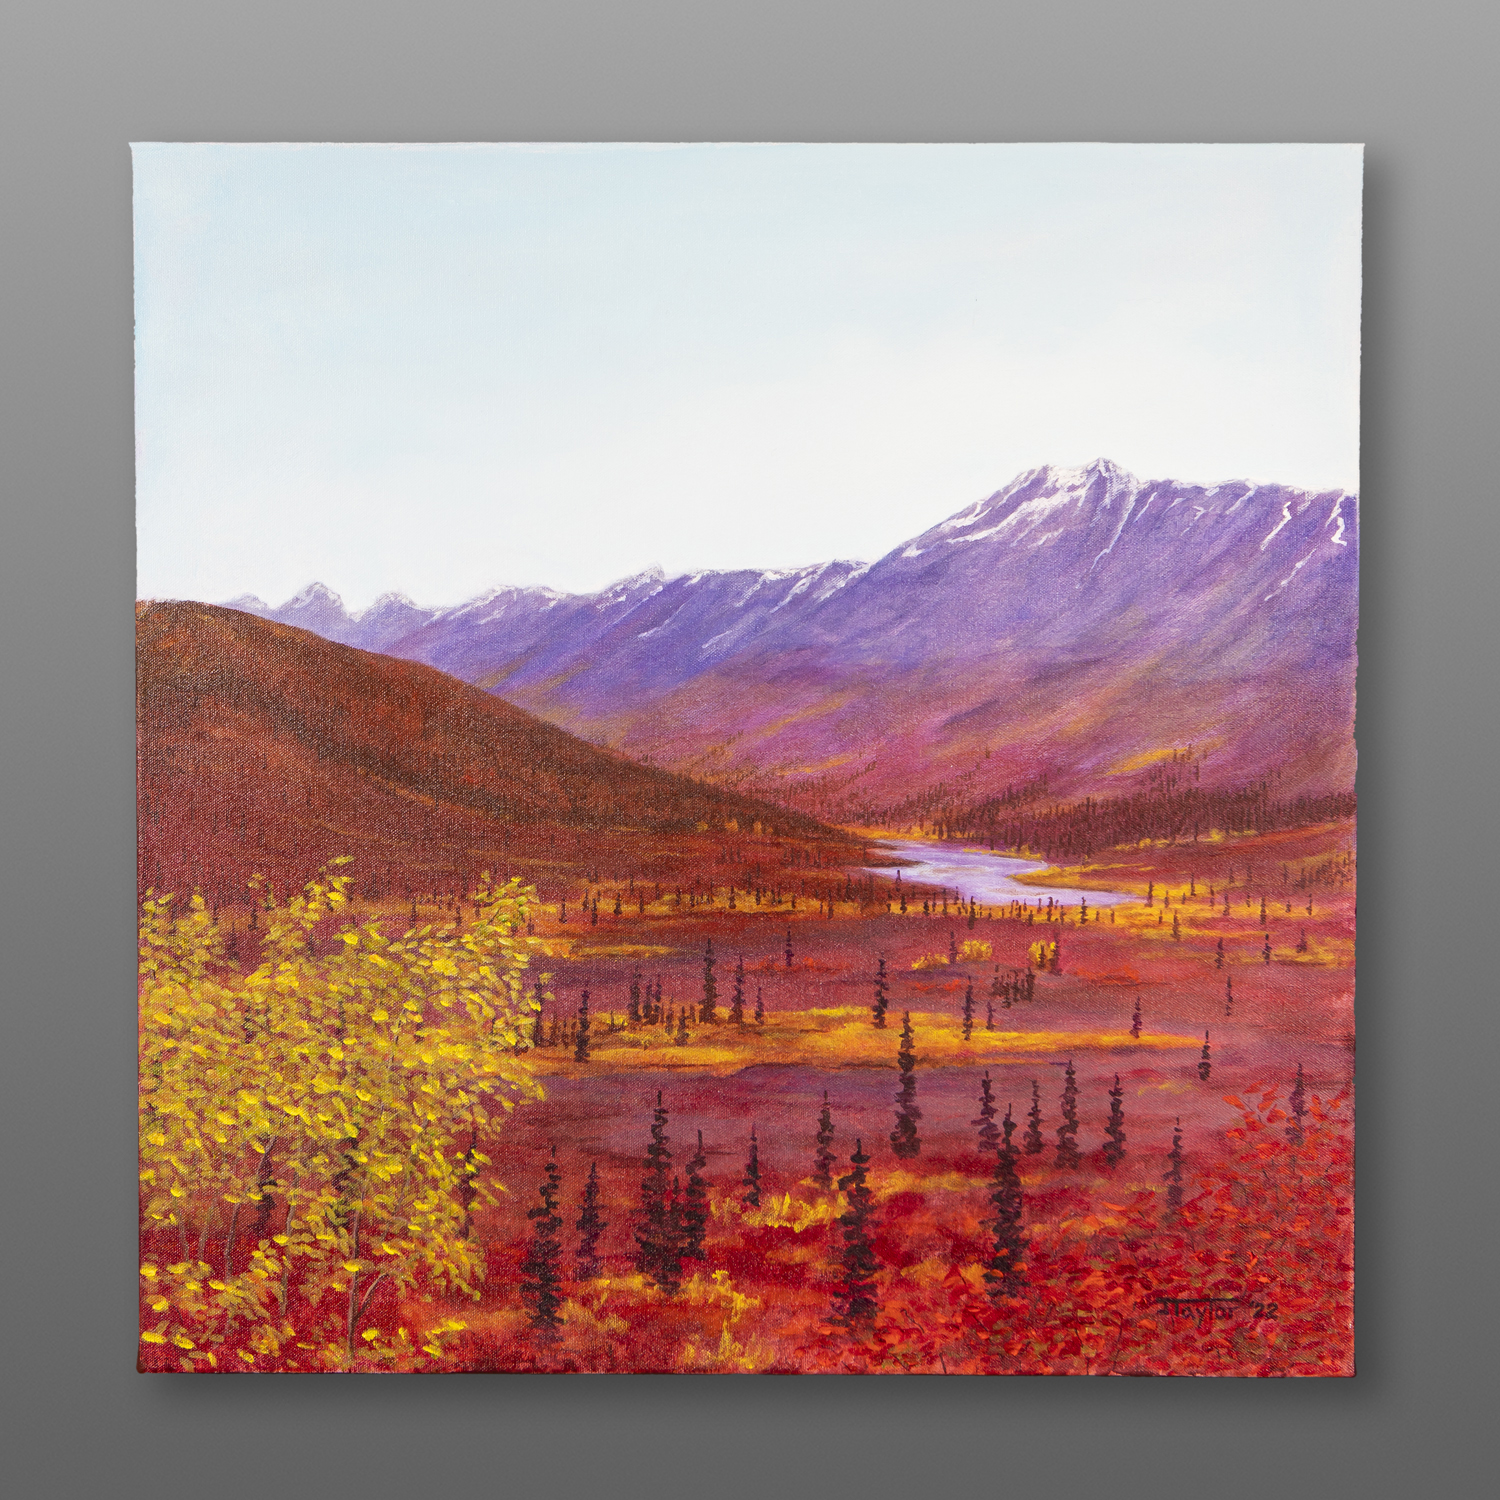 Northern September
Jean Taylor
Tlingit
Acrylic on canvas
24" x 24" x  1½”
$1450